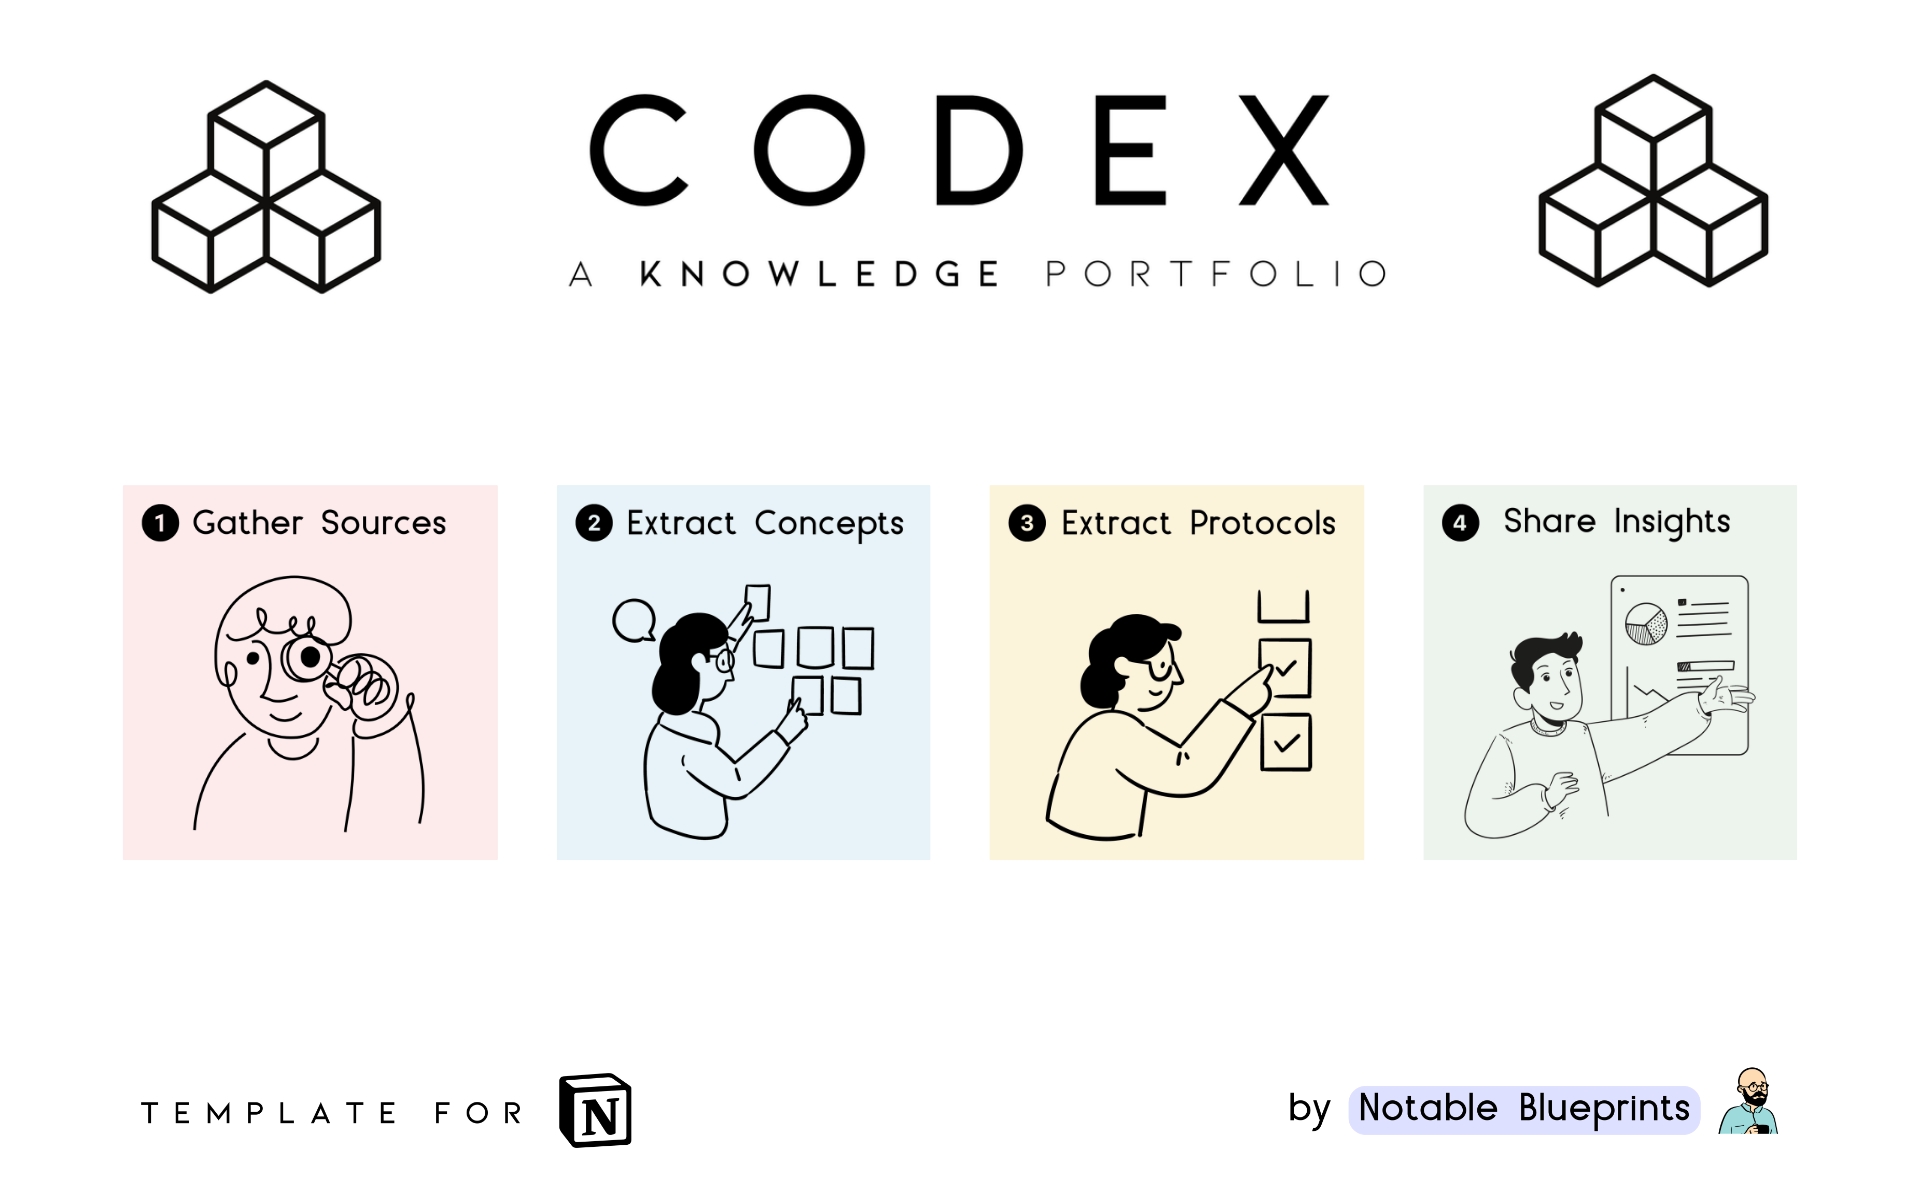 ⫷ CODEX ⫸ A Knowledge Portfolioのテンプレートのプレビュー